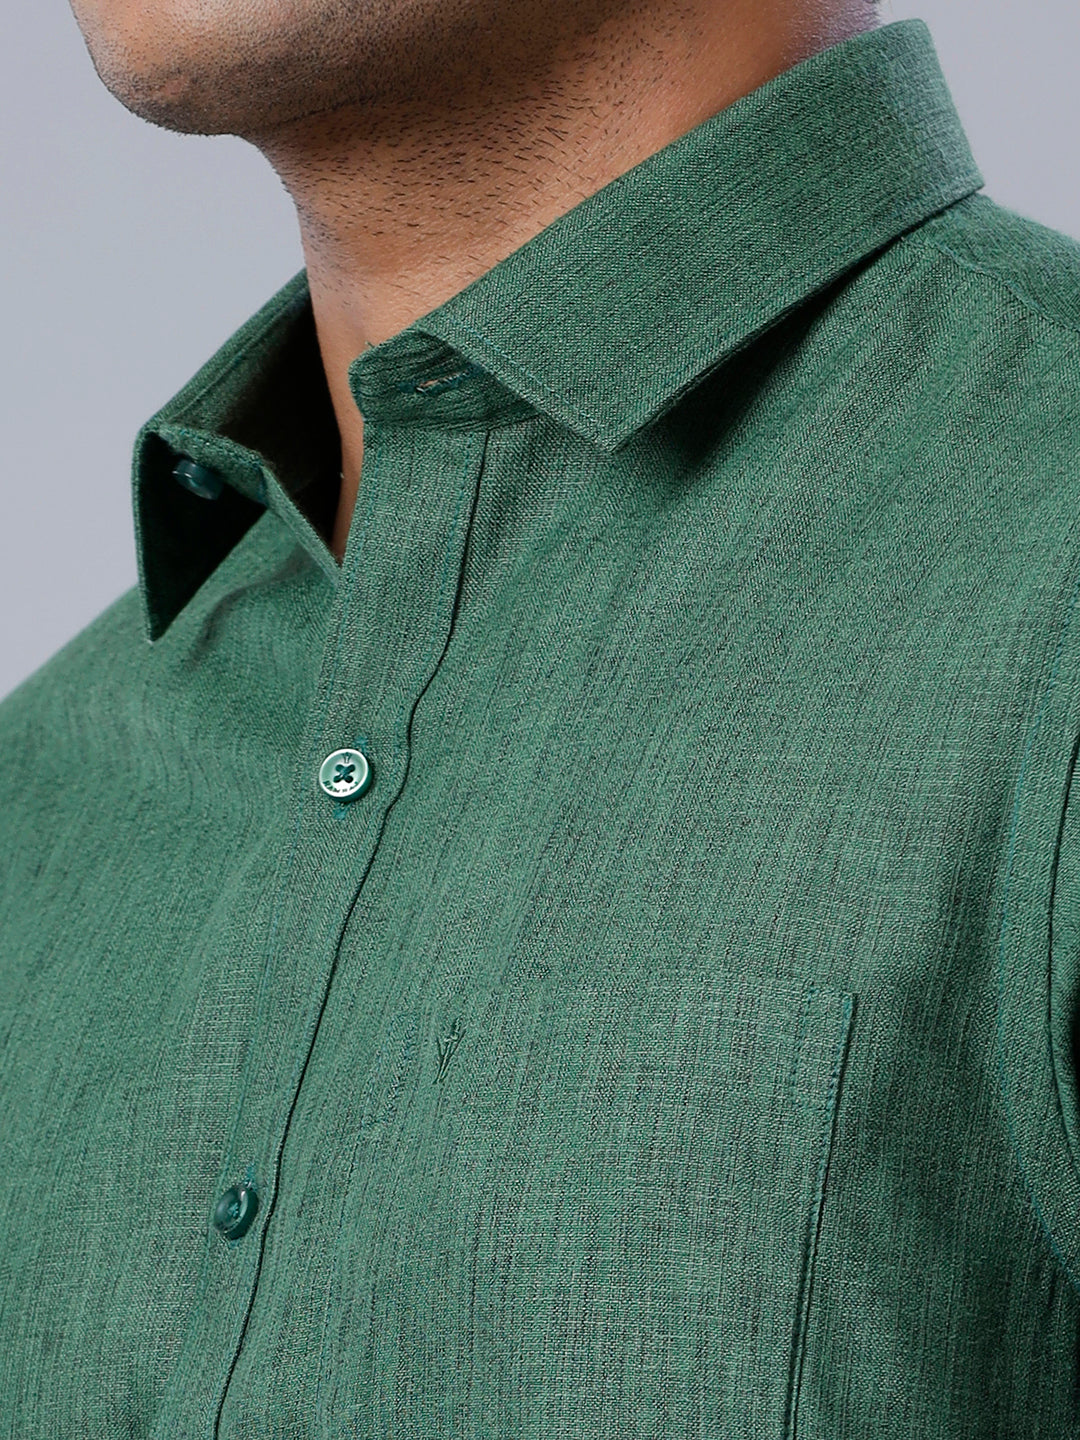 Mens Formal Shirt Full Sleeves Dark Green T26 TB9-Zoom view